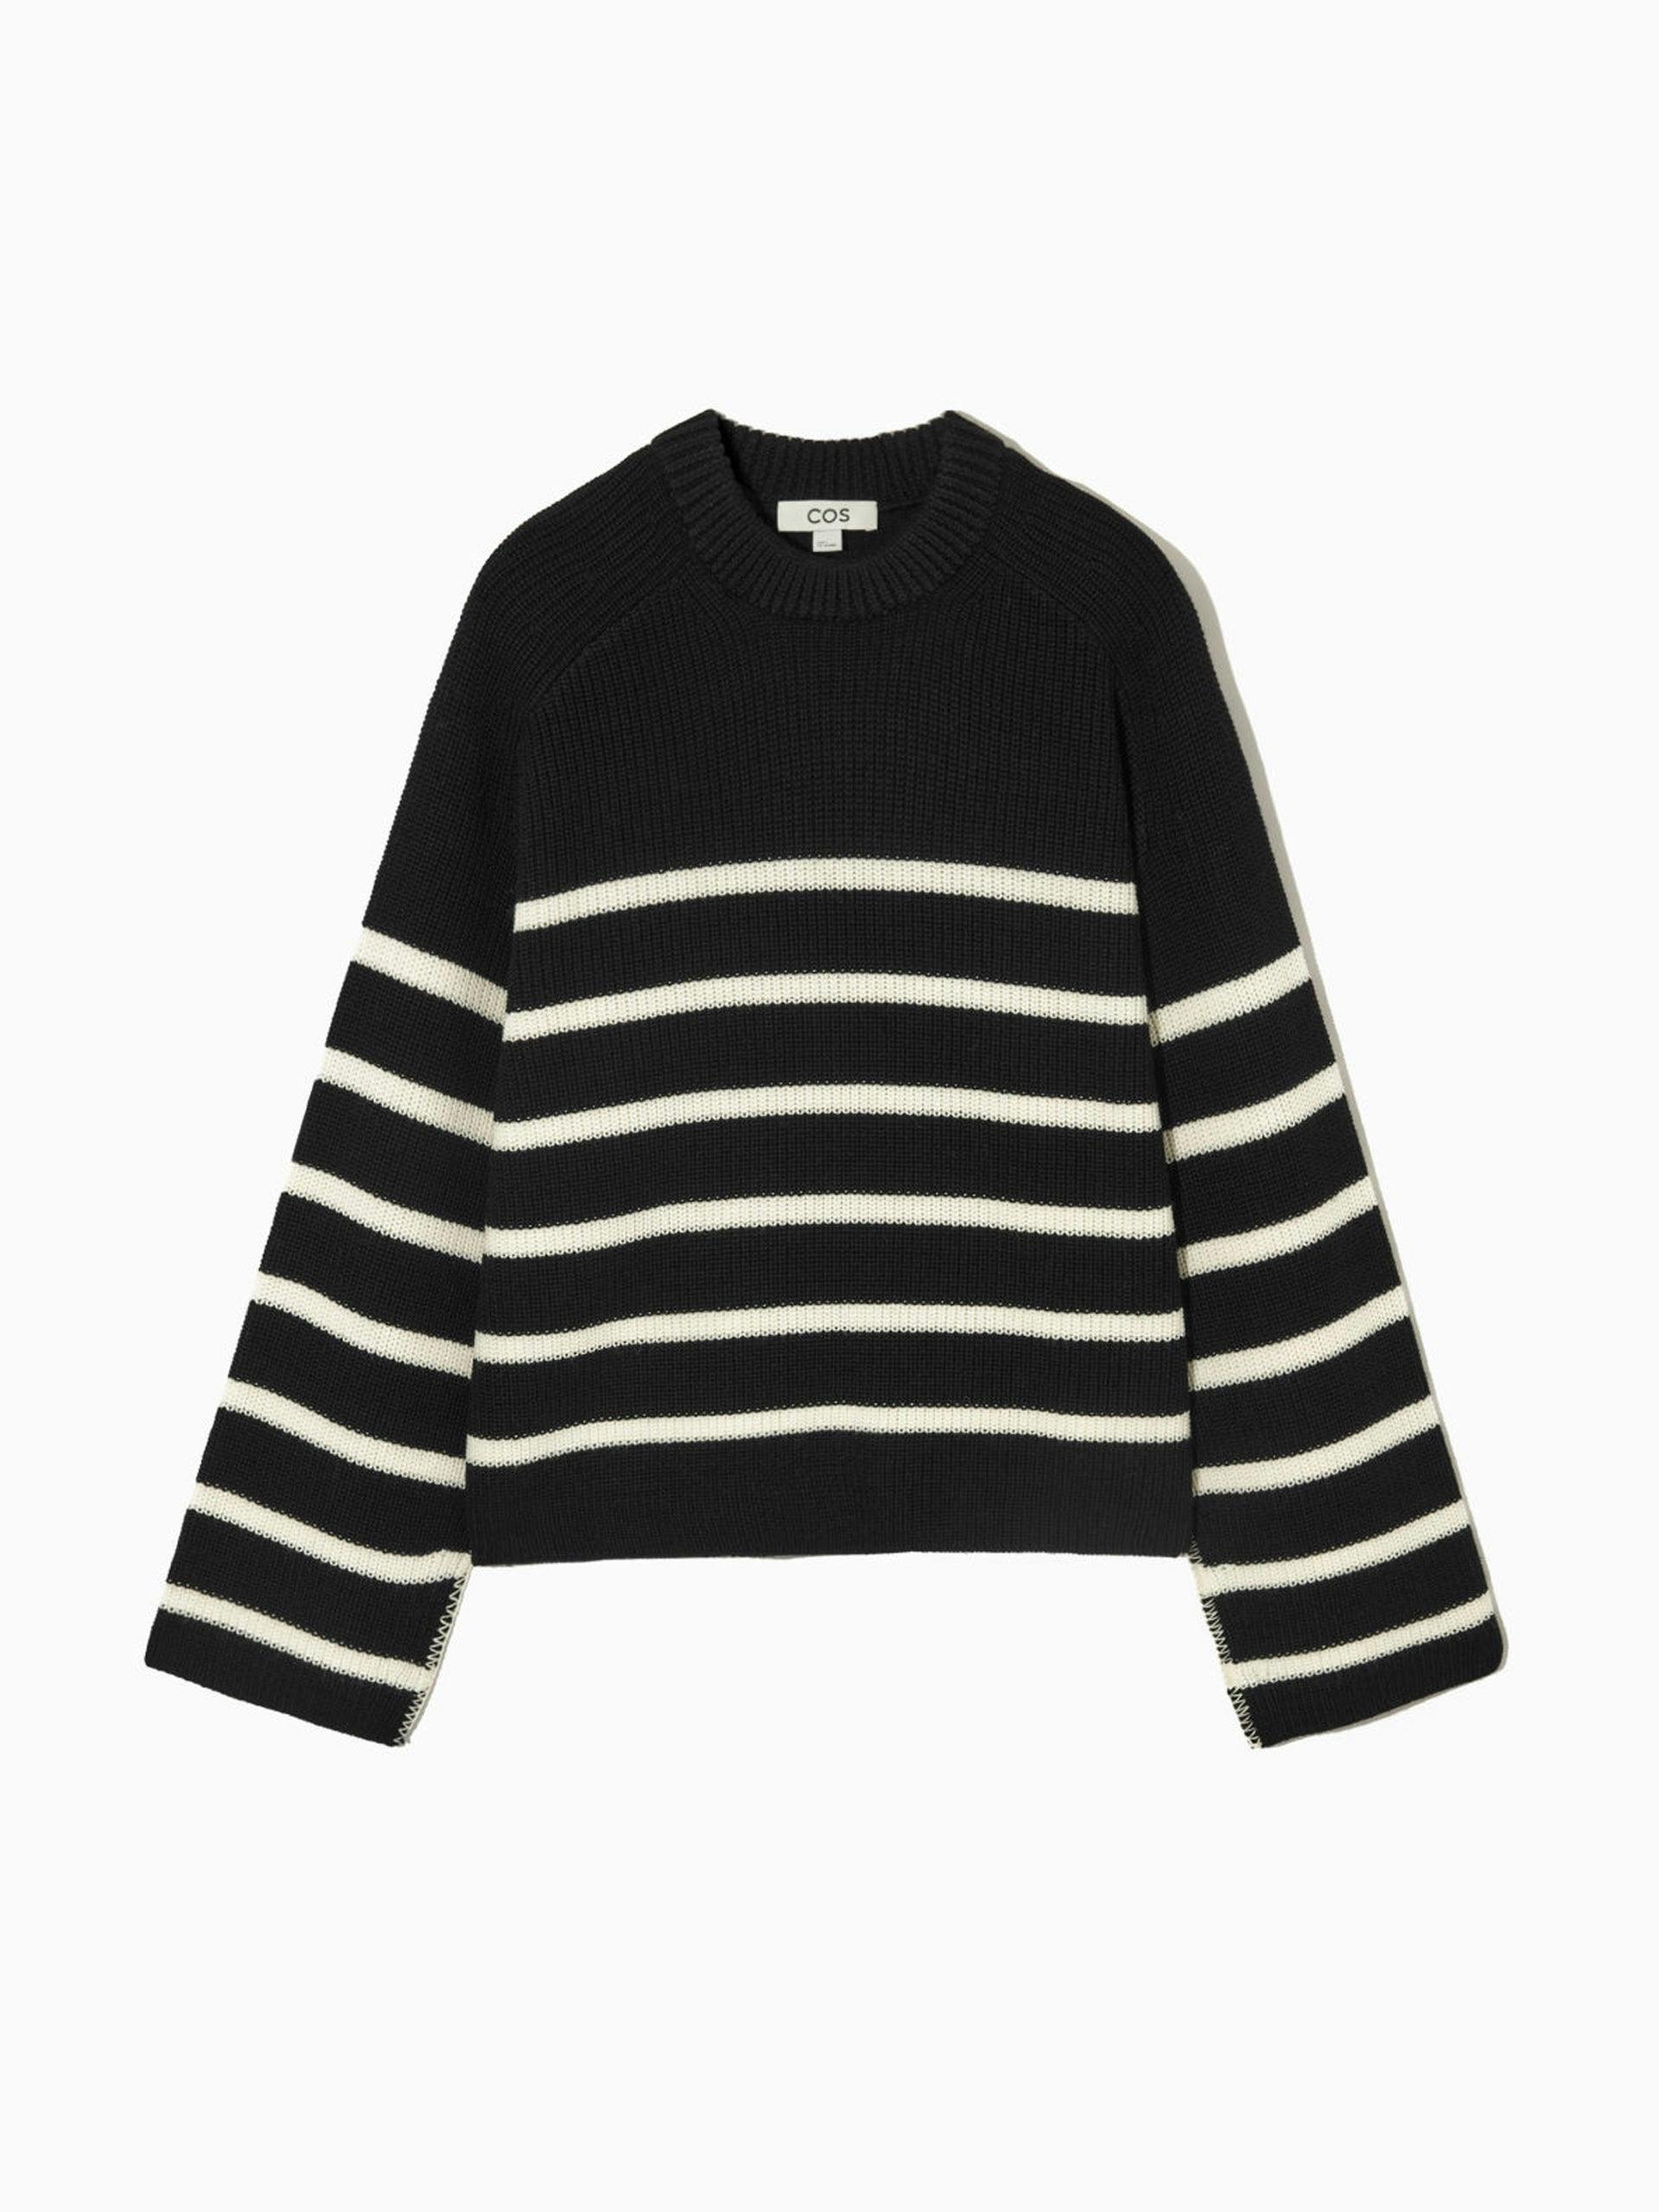 Heavyweight striped knitted jumper